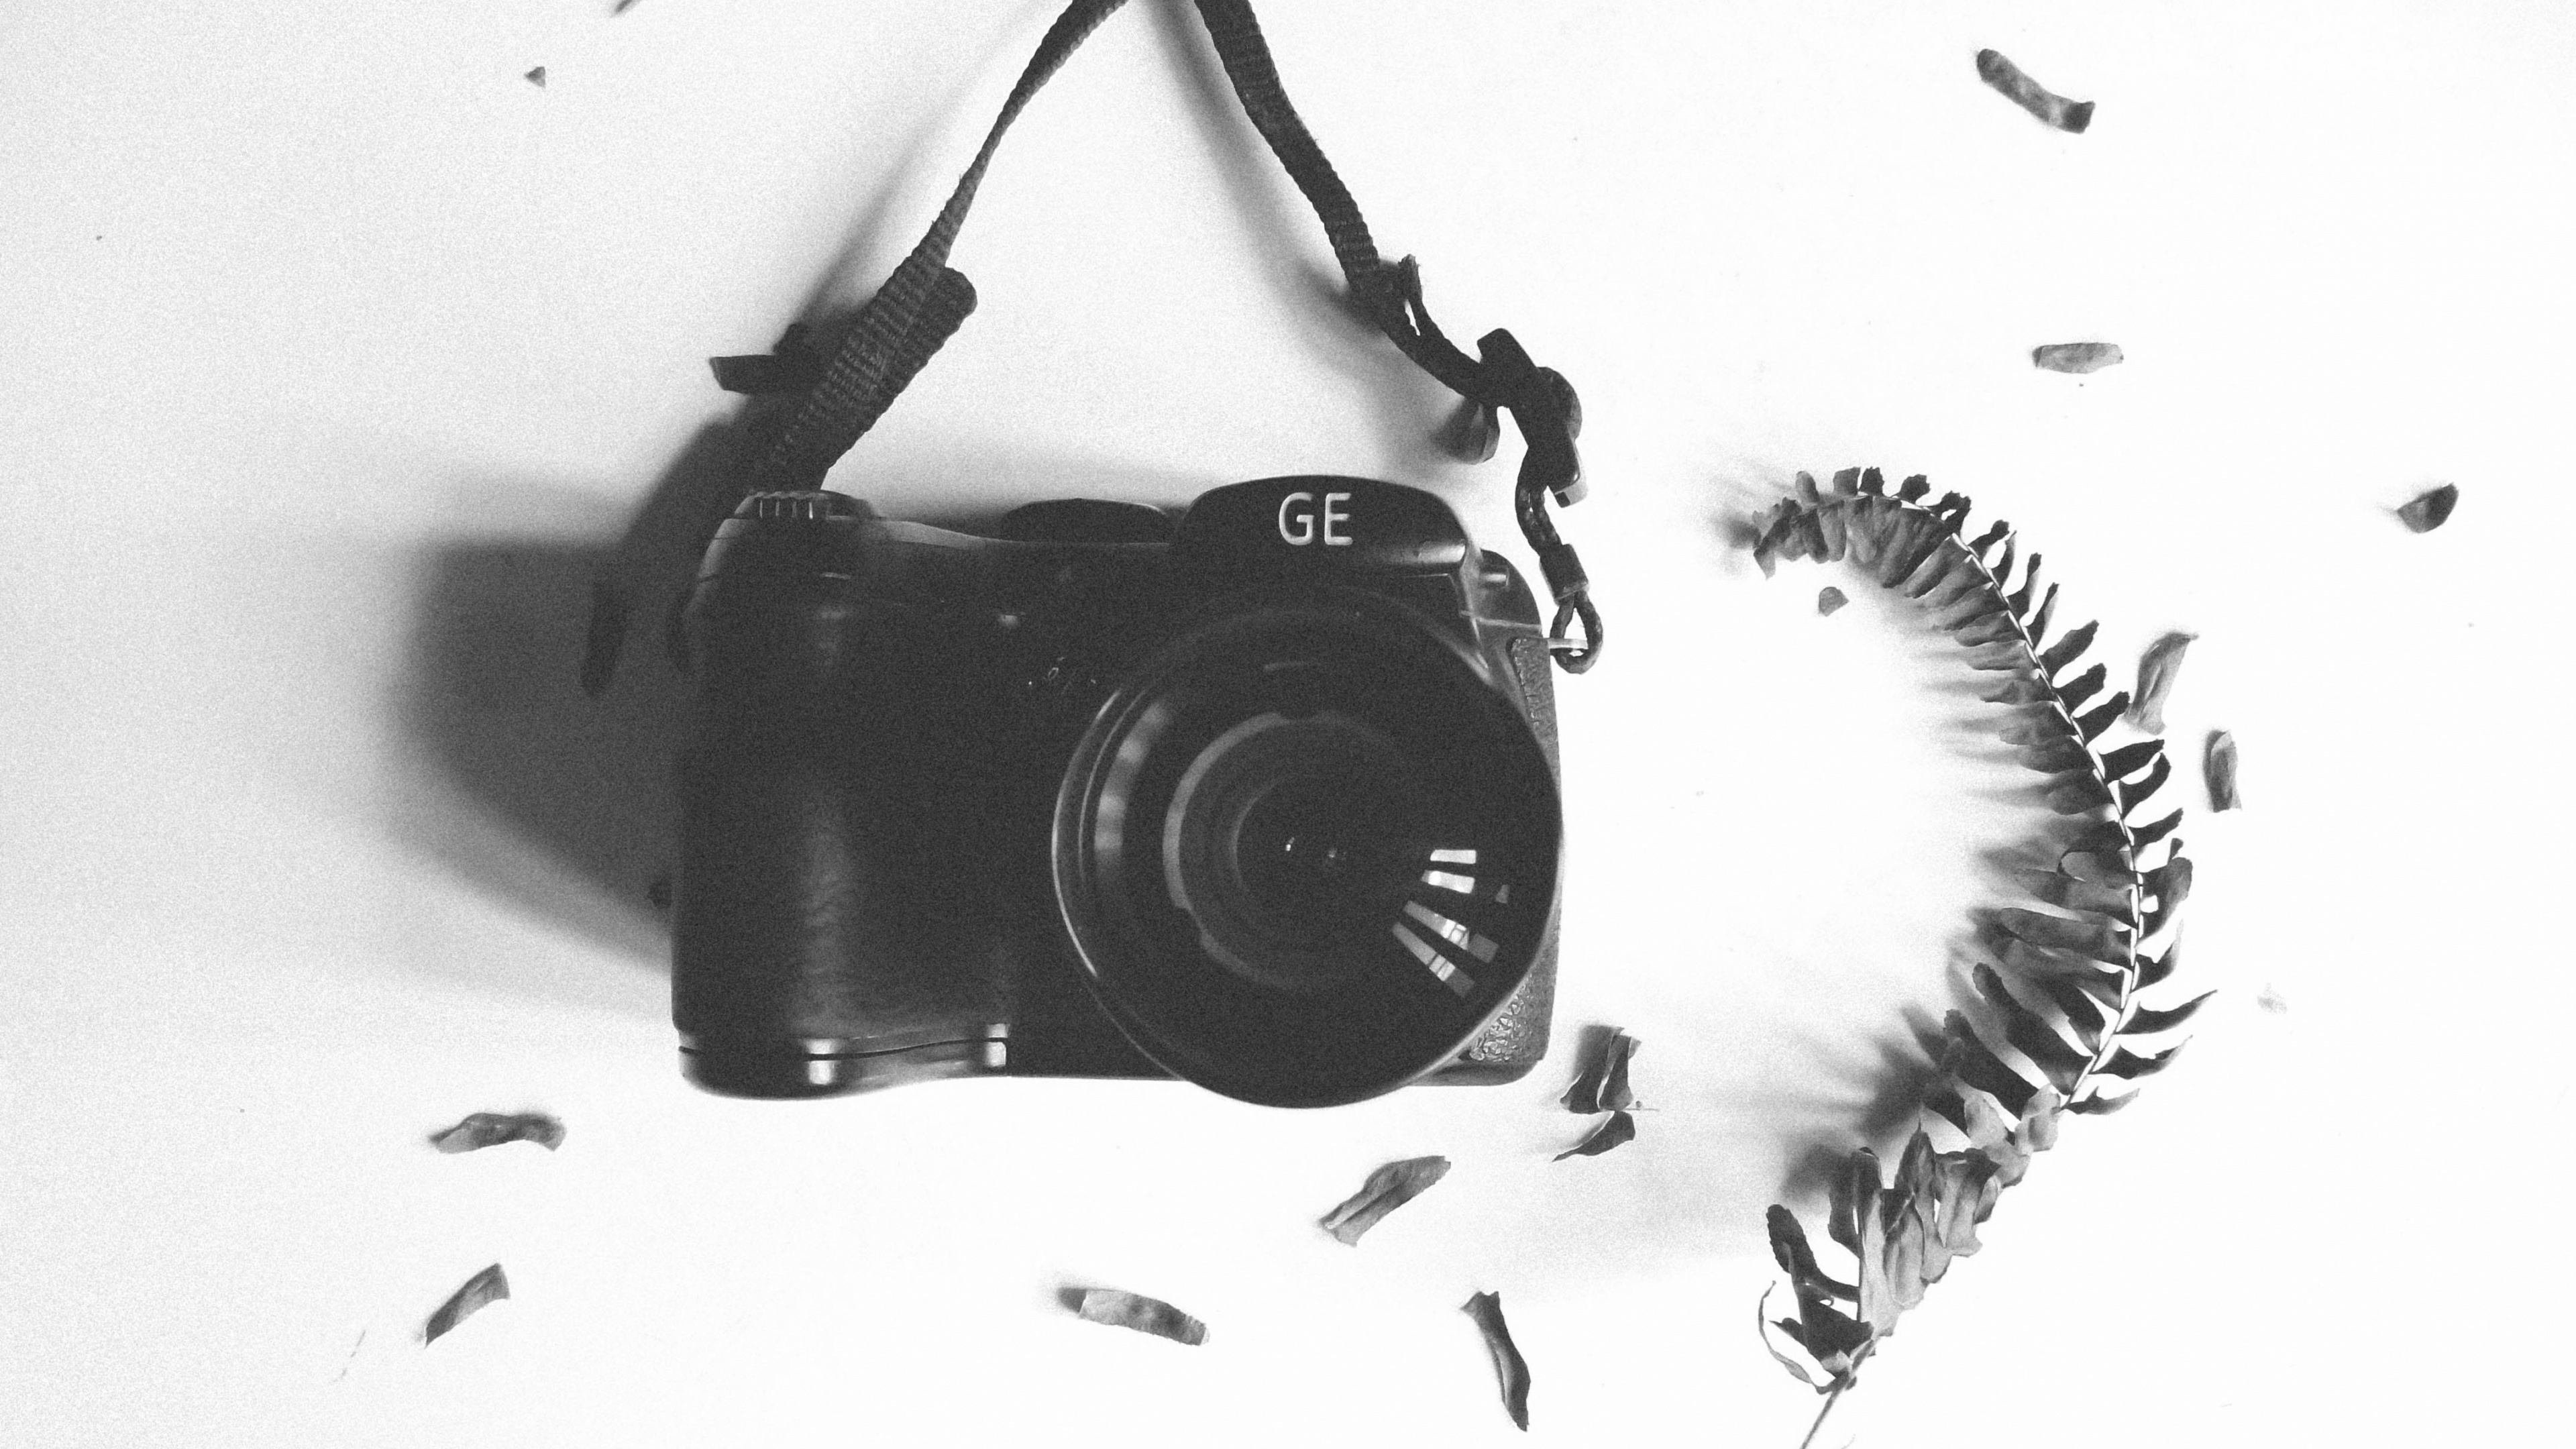 Black Nikon Dslr Camera on White Textile. Wallpaper in 3840x2160 Resolution